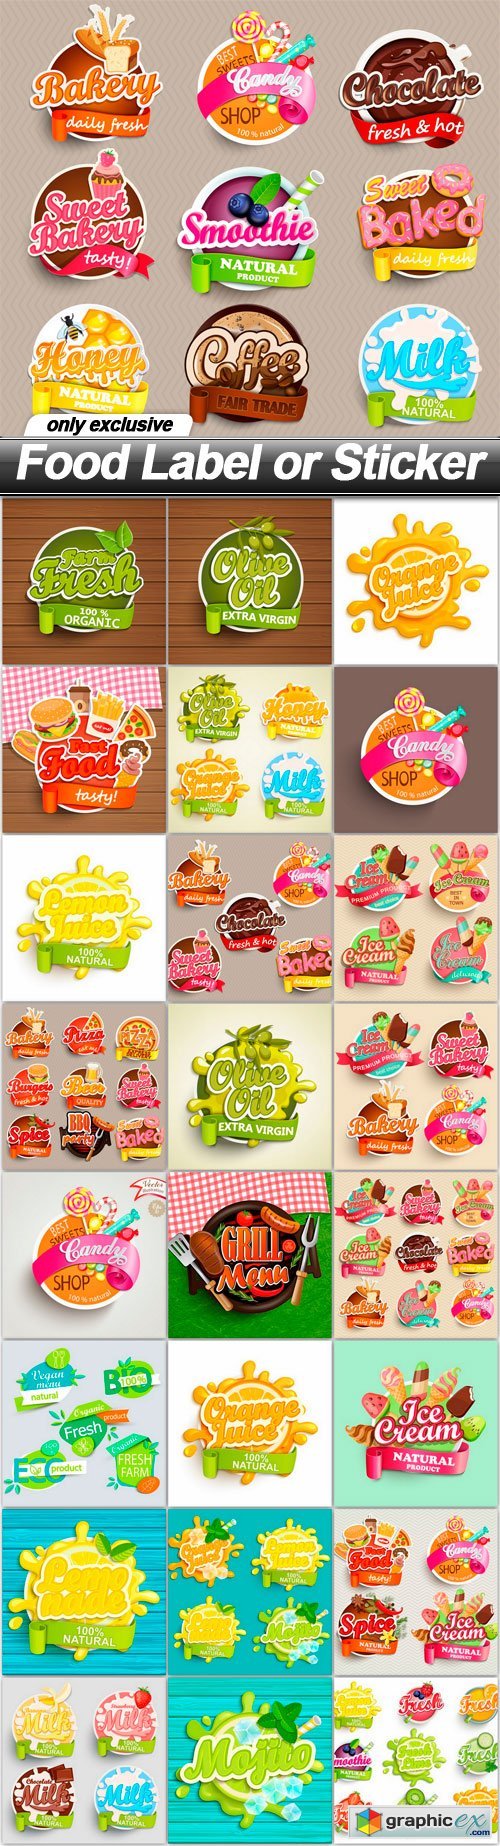 Food Label or Sticker - 25 EPS